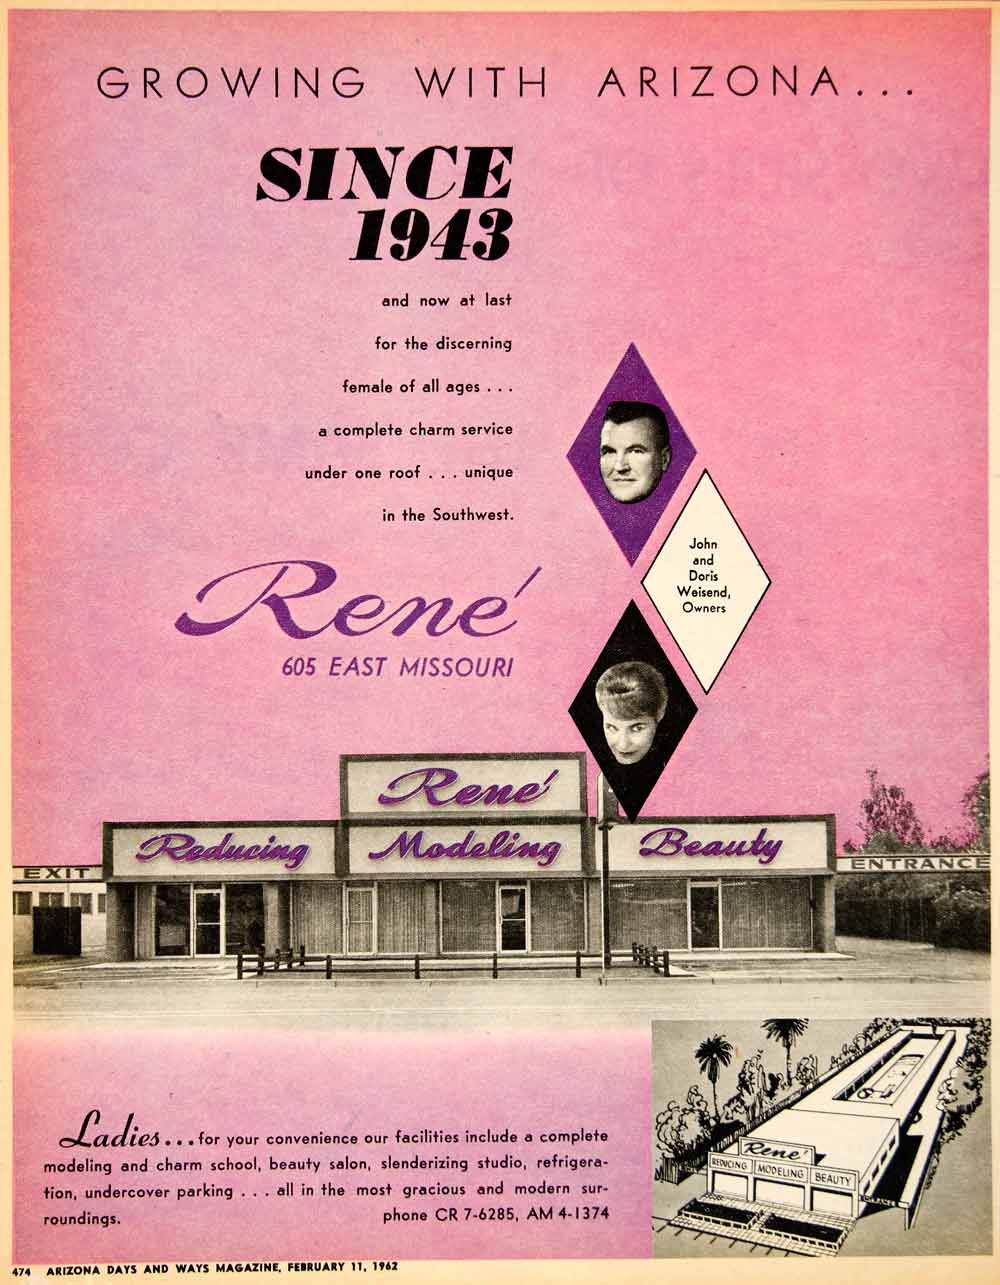 1962 Ad Rene Reducing Modeling Beauty Weisland John Doris Ladies Facility XGSC4